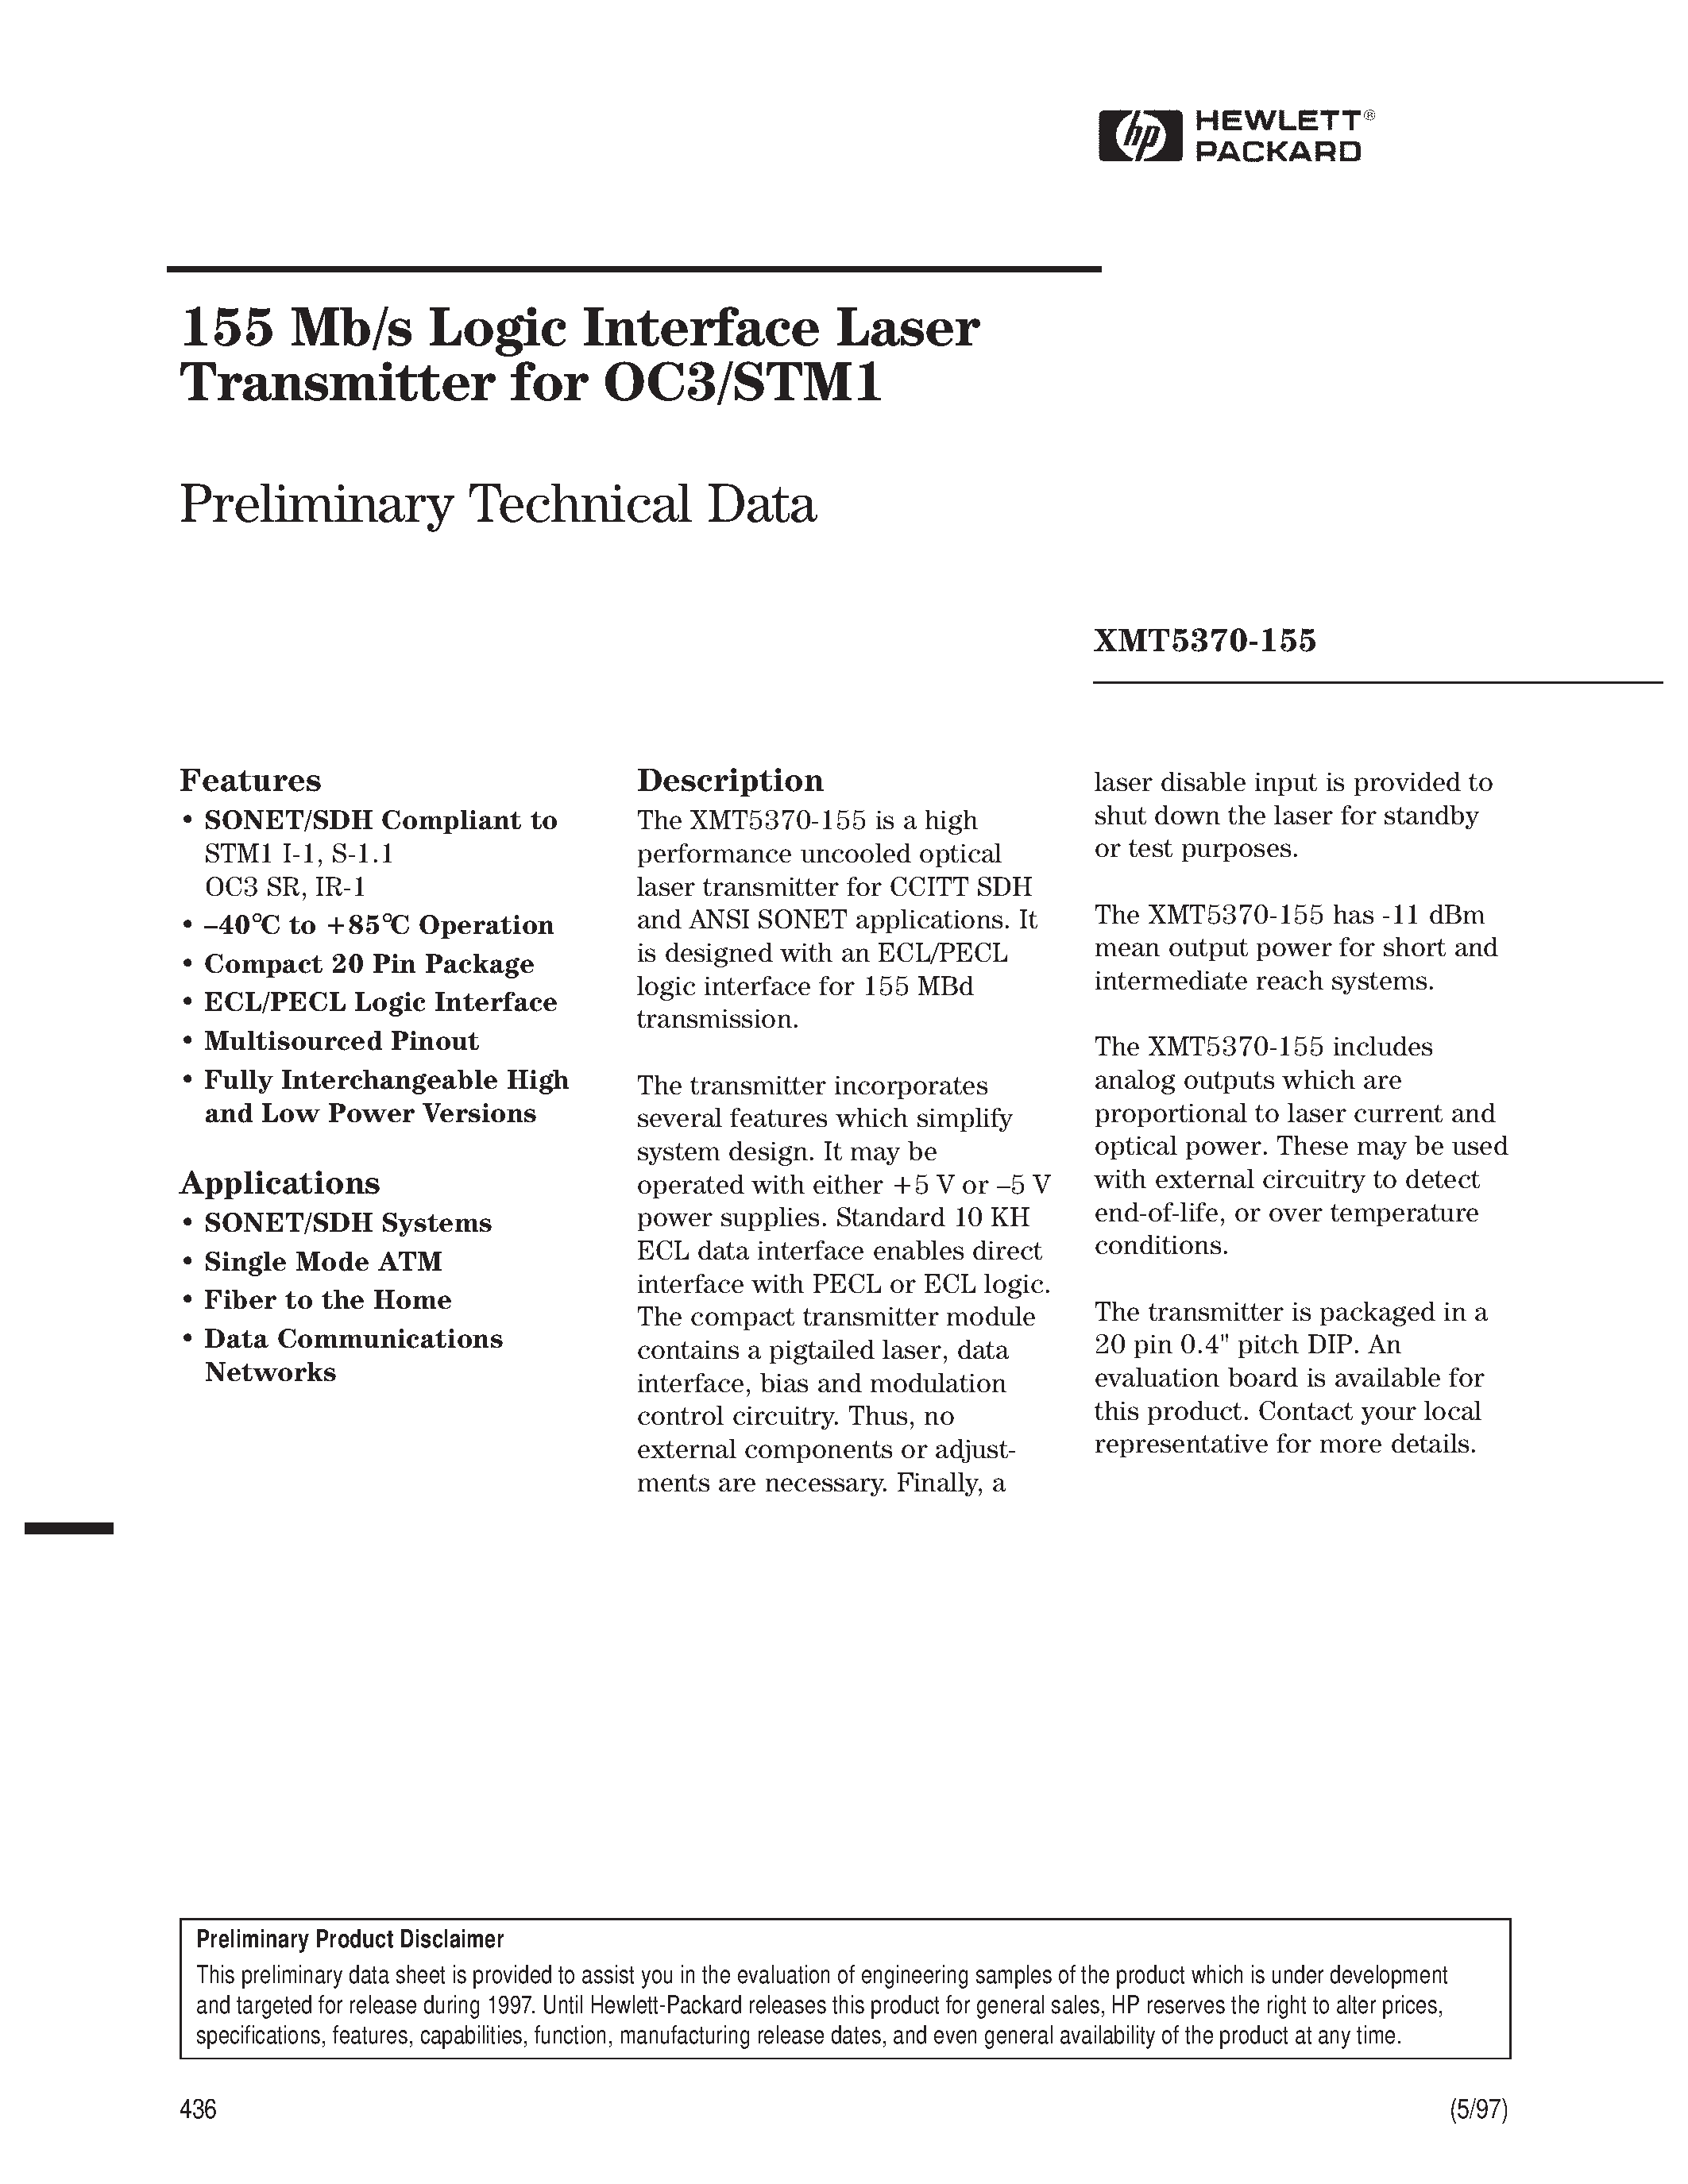 Datasheet XMT5370A-155-FP - 155 Mb/s Logic Interface Laser Transmitter for OC3/STM1 page 1